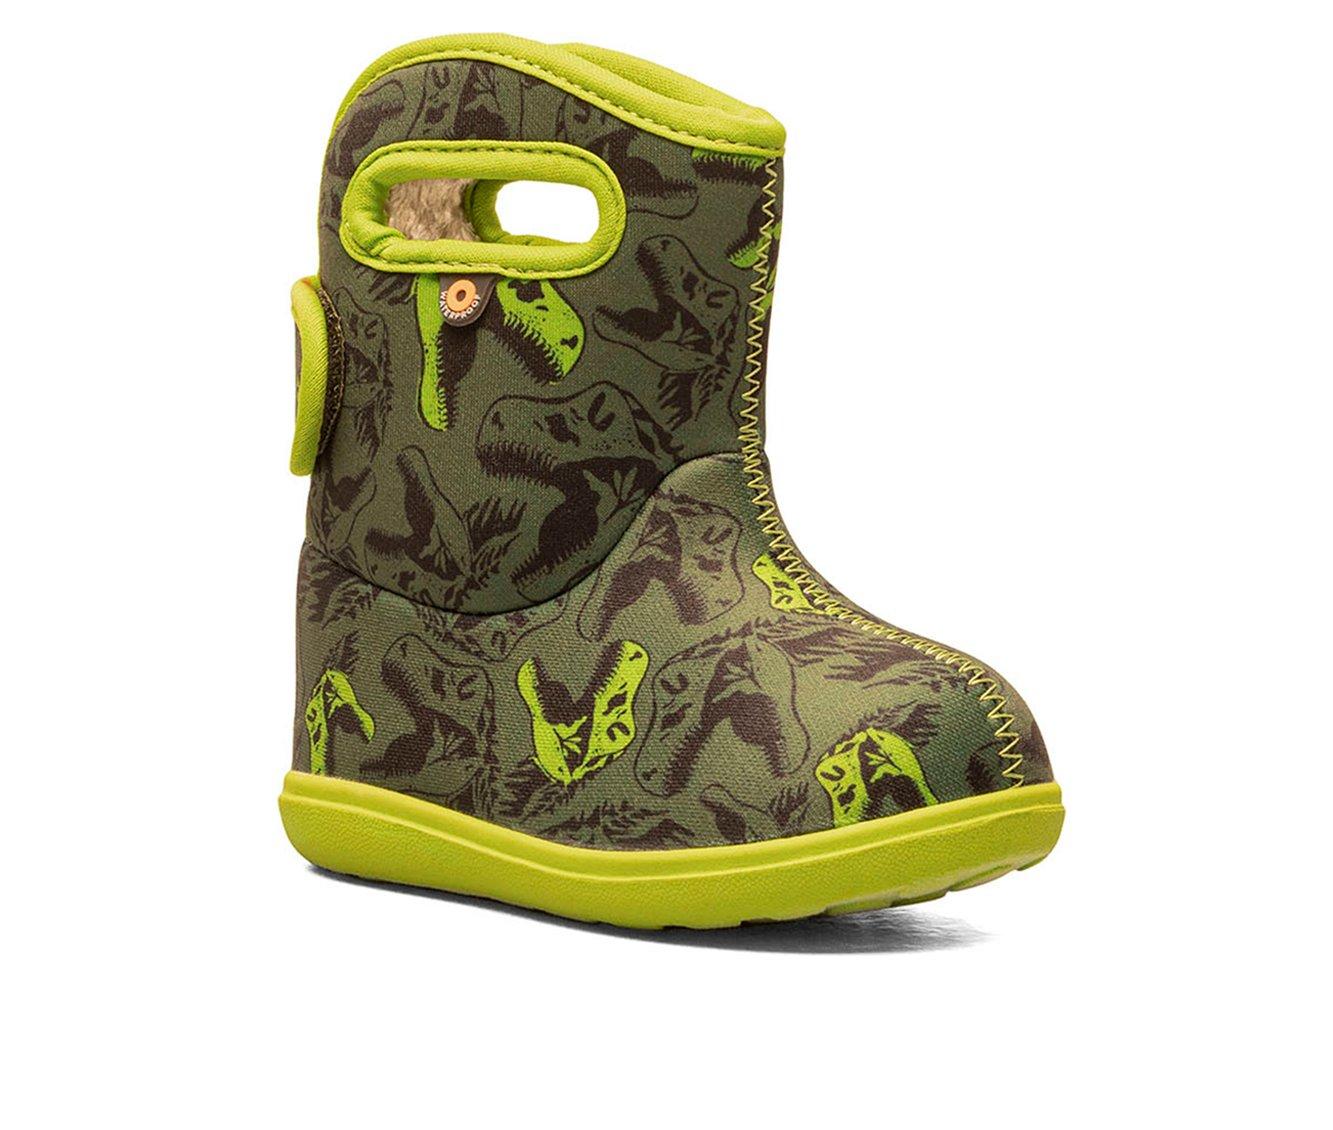 Boys' Bogs Footwear Toddler Baby Bogs II Dino Rain Boots